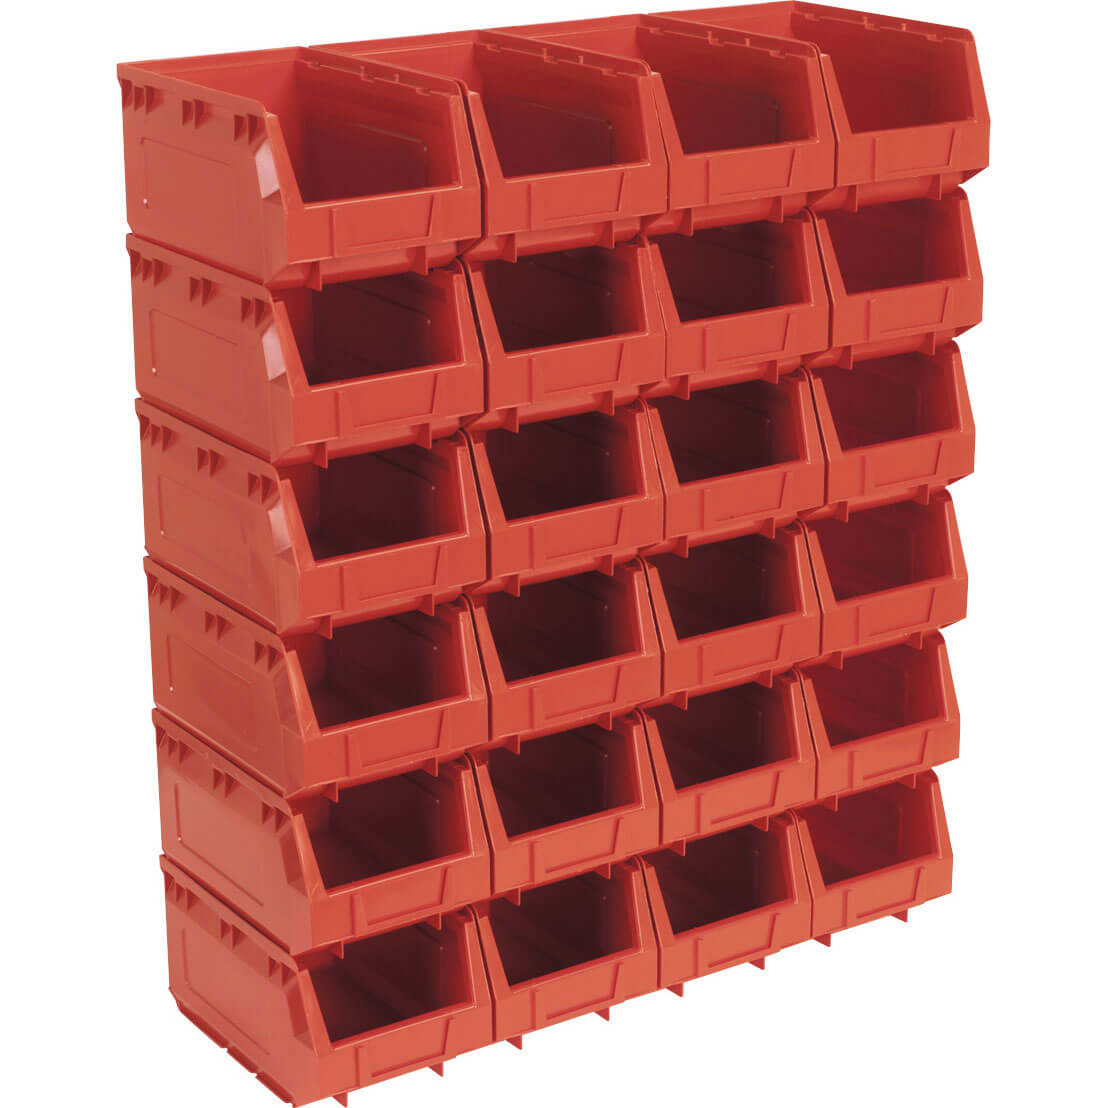 Image of Sealey Plastic Storage Bin 103 x 85 x 53mm RED 24